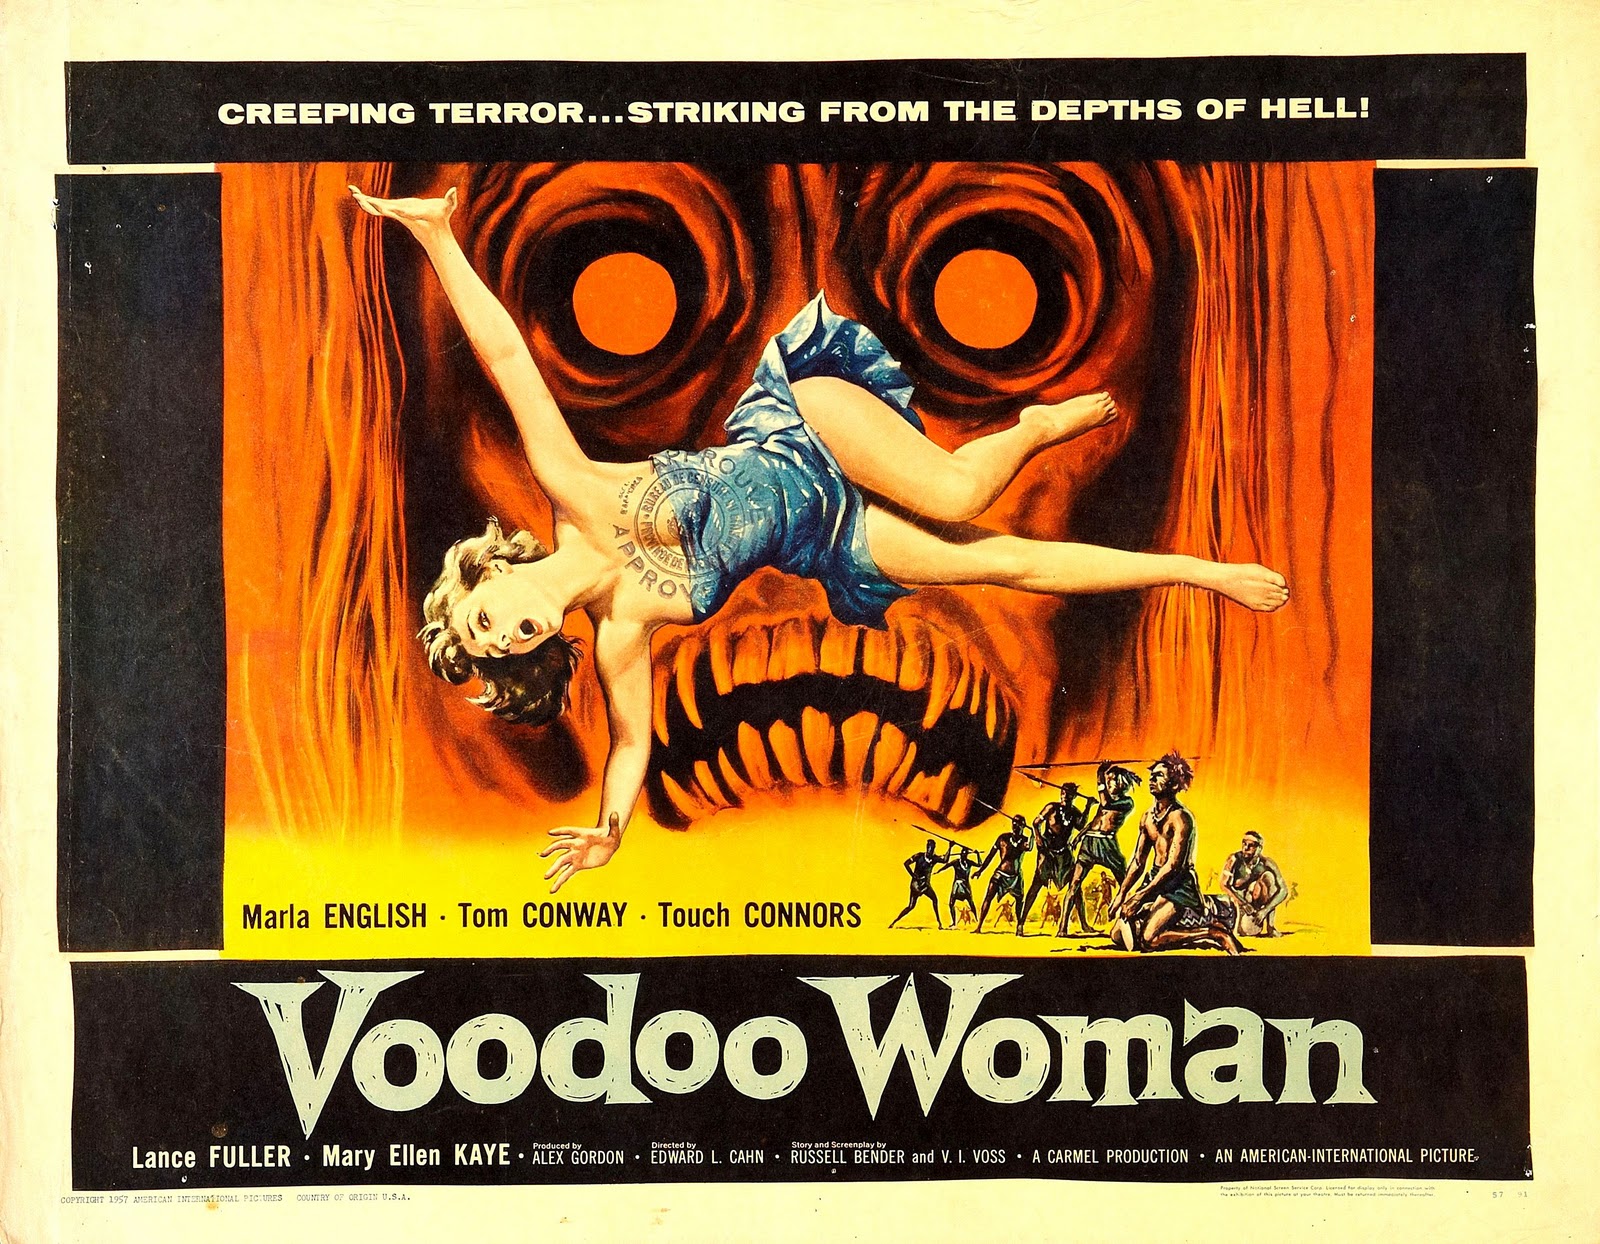 547079 Bild herunterladen filme, voodoo woman, gruselig, halloween, grusel, okkult, gespenstisch, voodoo, hexe - Hintergrundbilder und Bildschirmschoner kostenlos